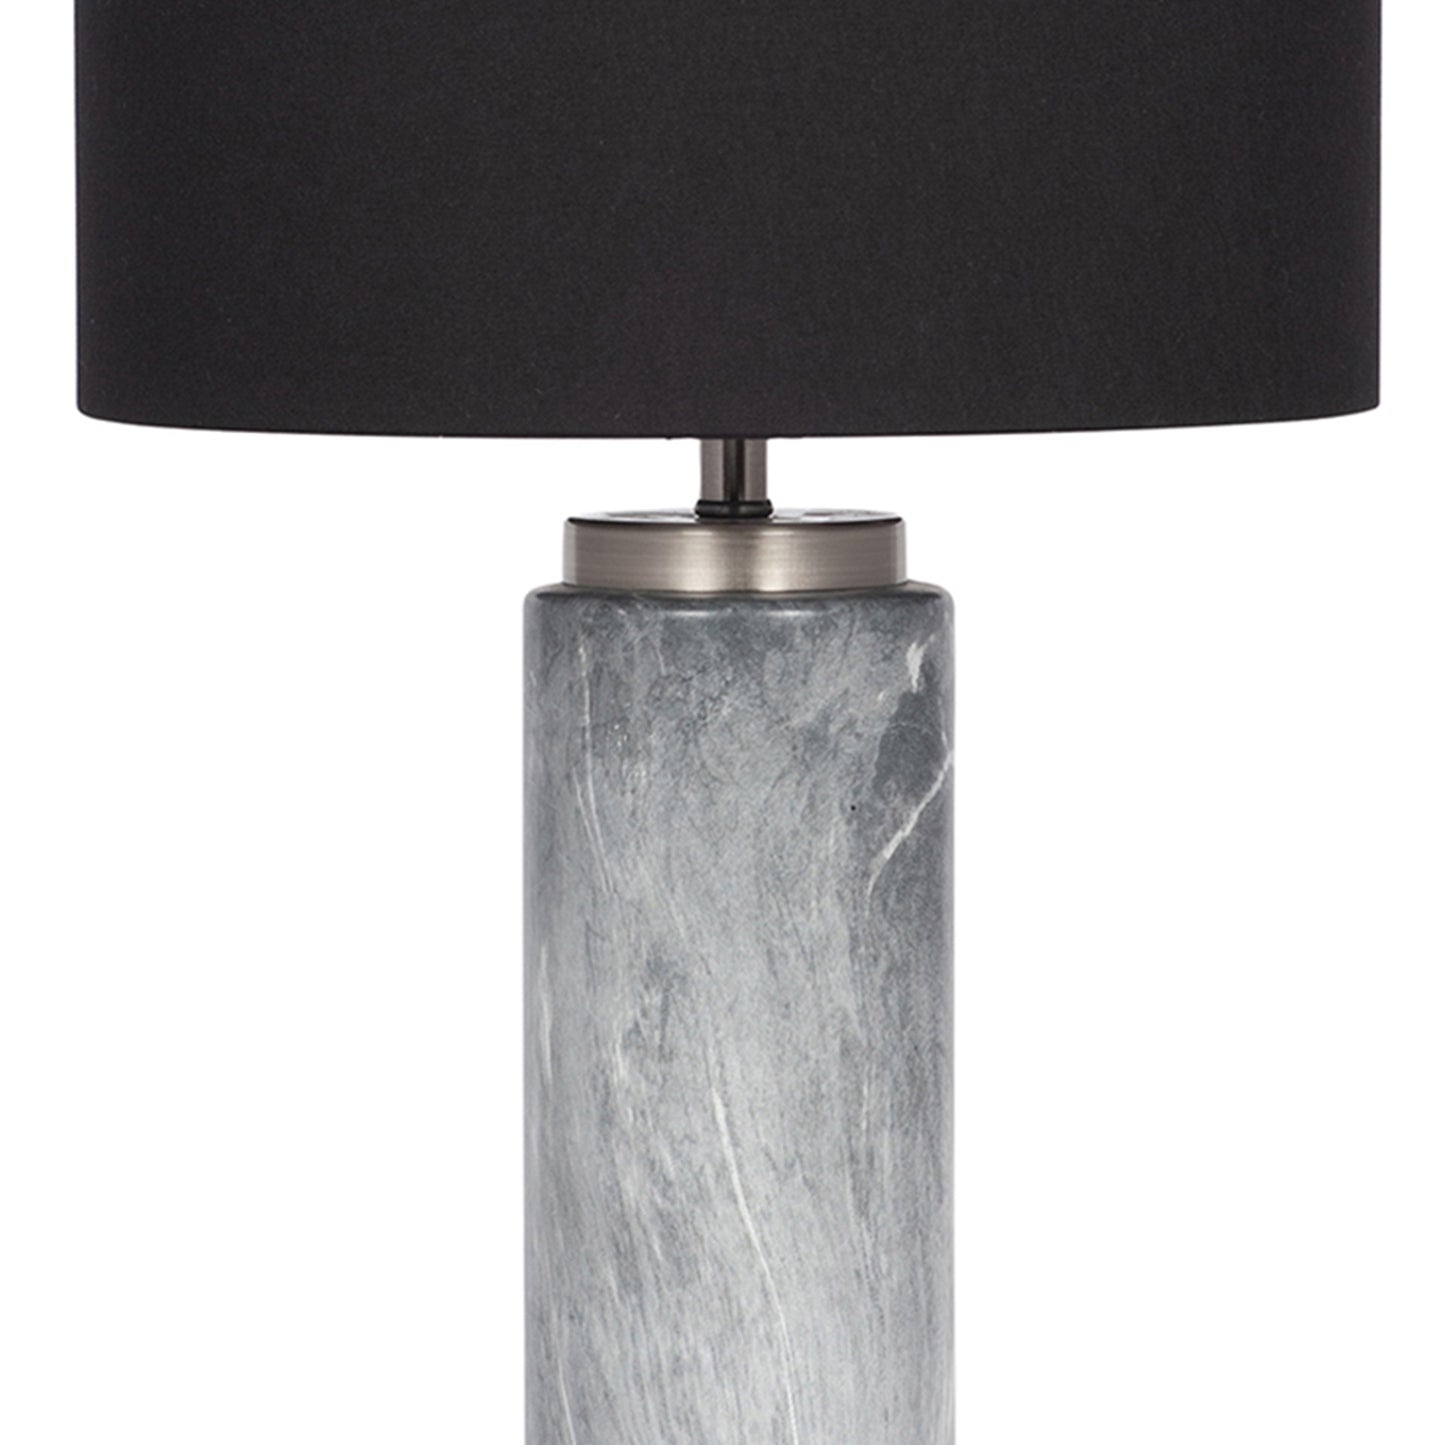 Grey Marble Effect Ceramic Table Lamp